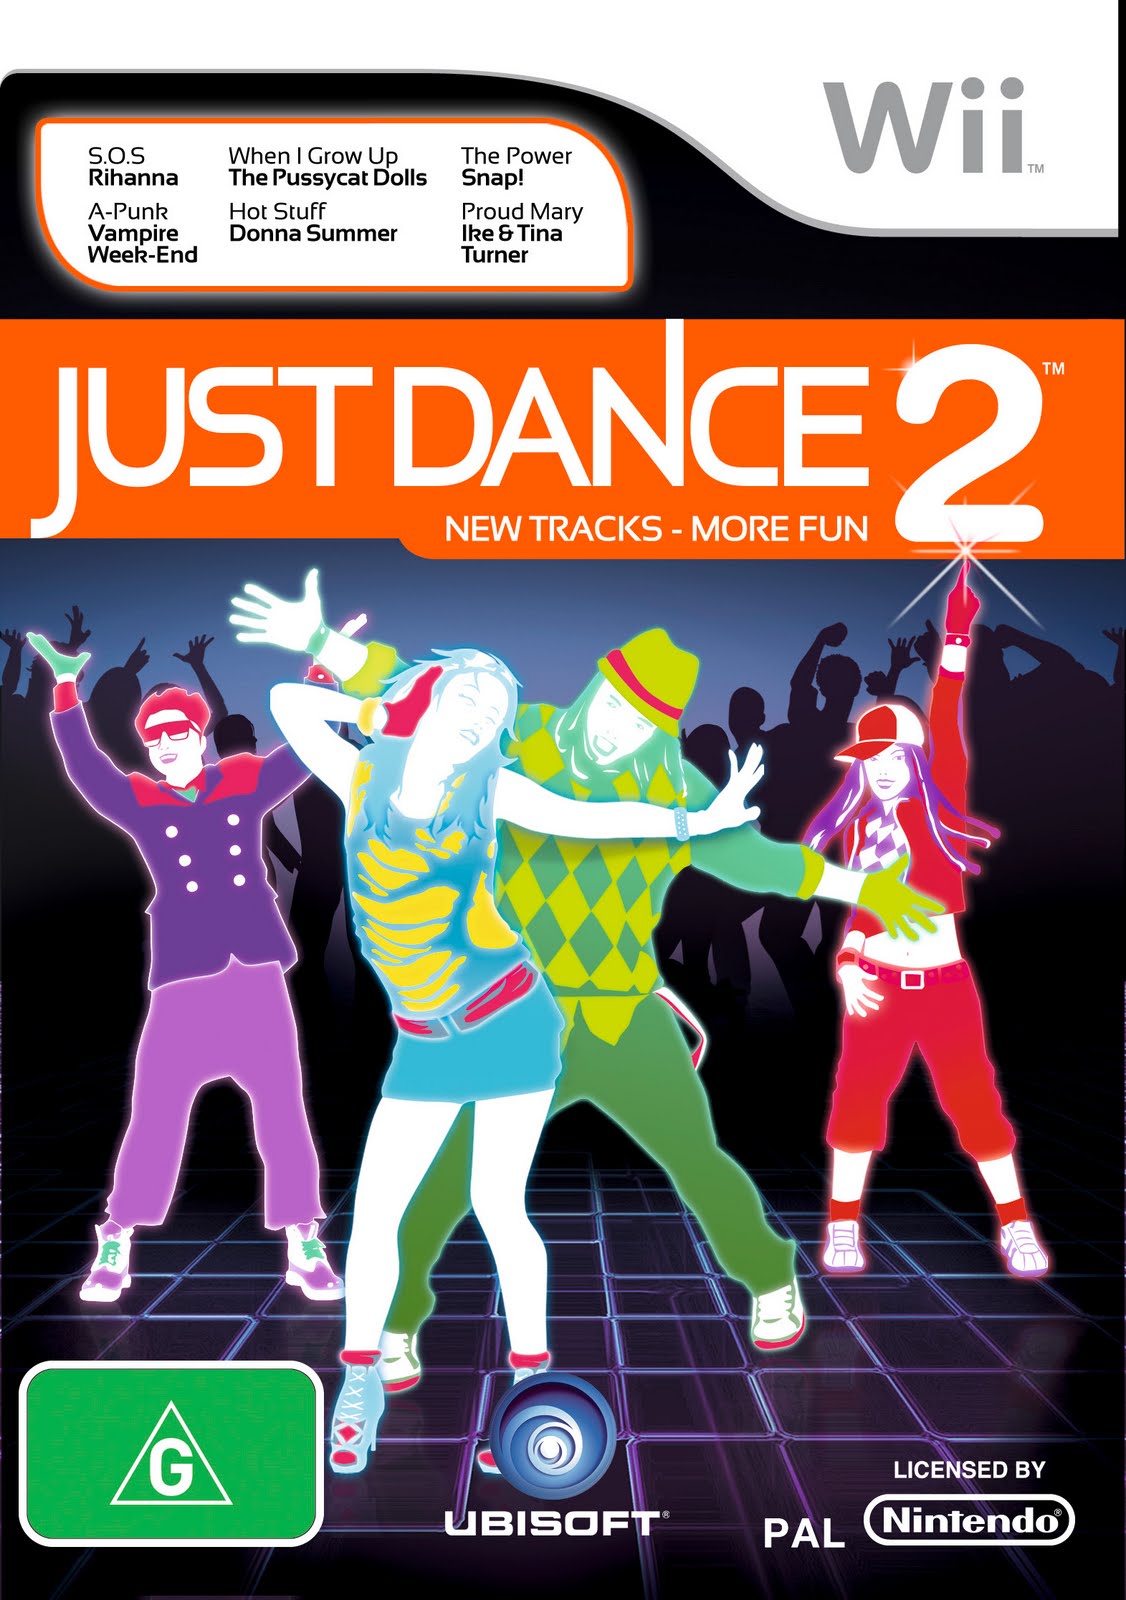 Wii just dance 2